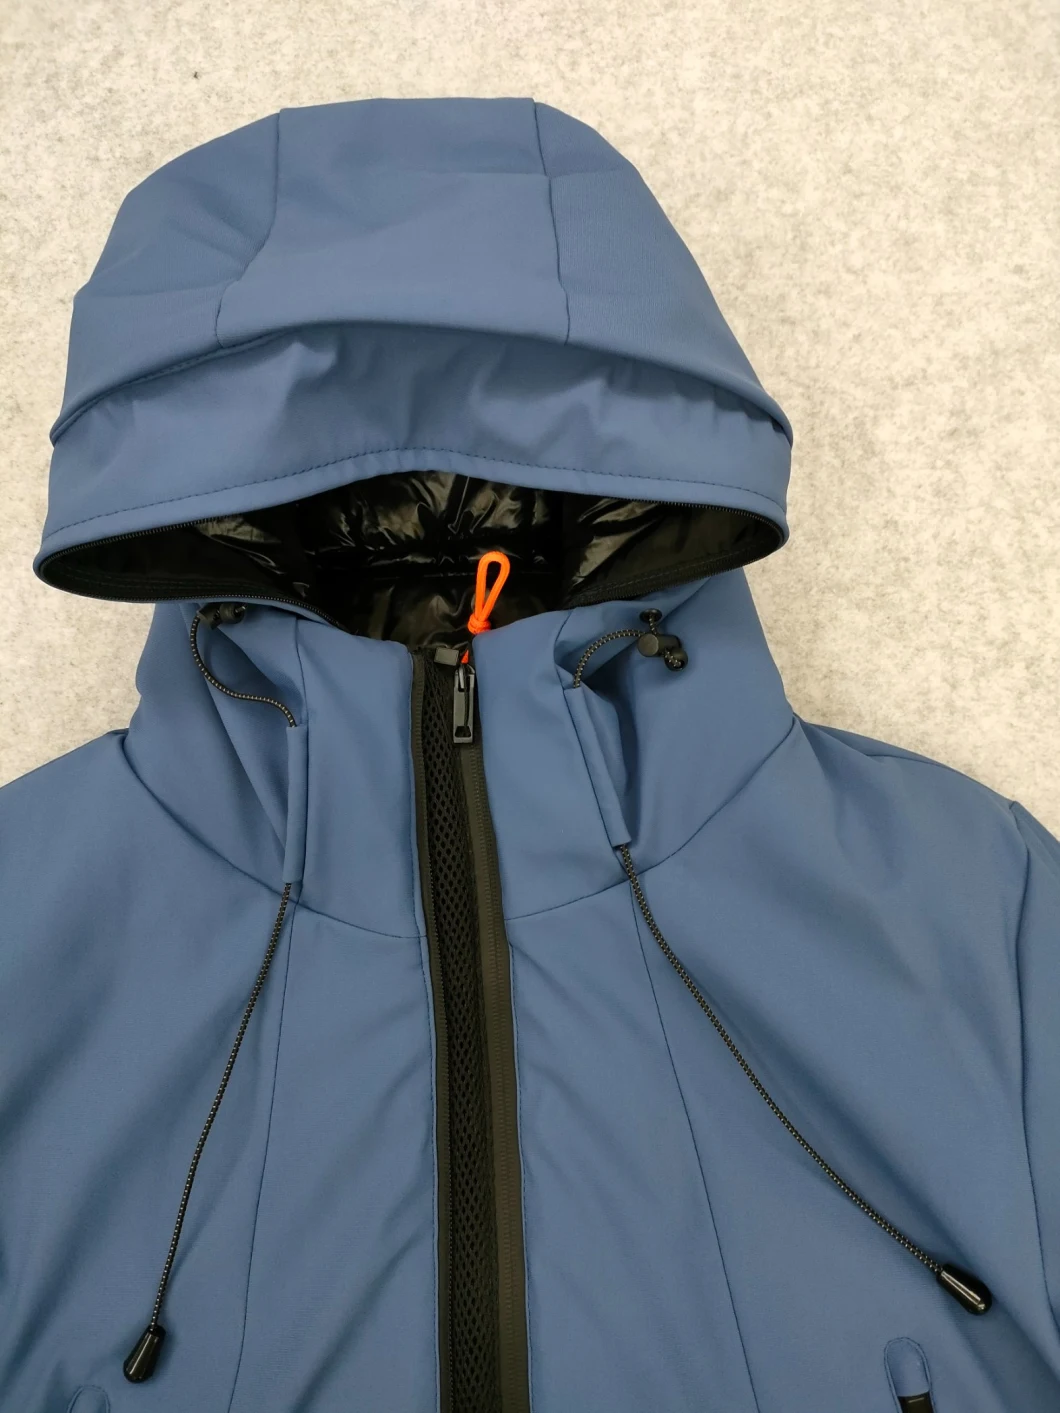 Men&prime;s Spandex-Nylon Technich Sports out Wear Contrast Front Zipper Hoodie Jacket/Rain Coat